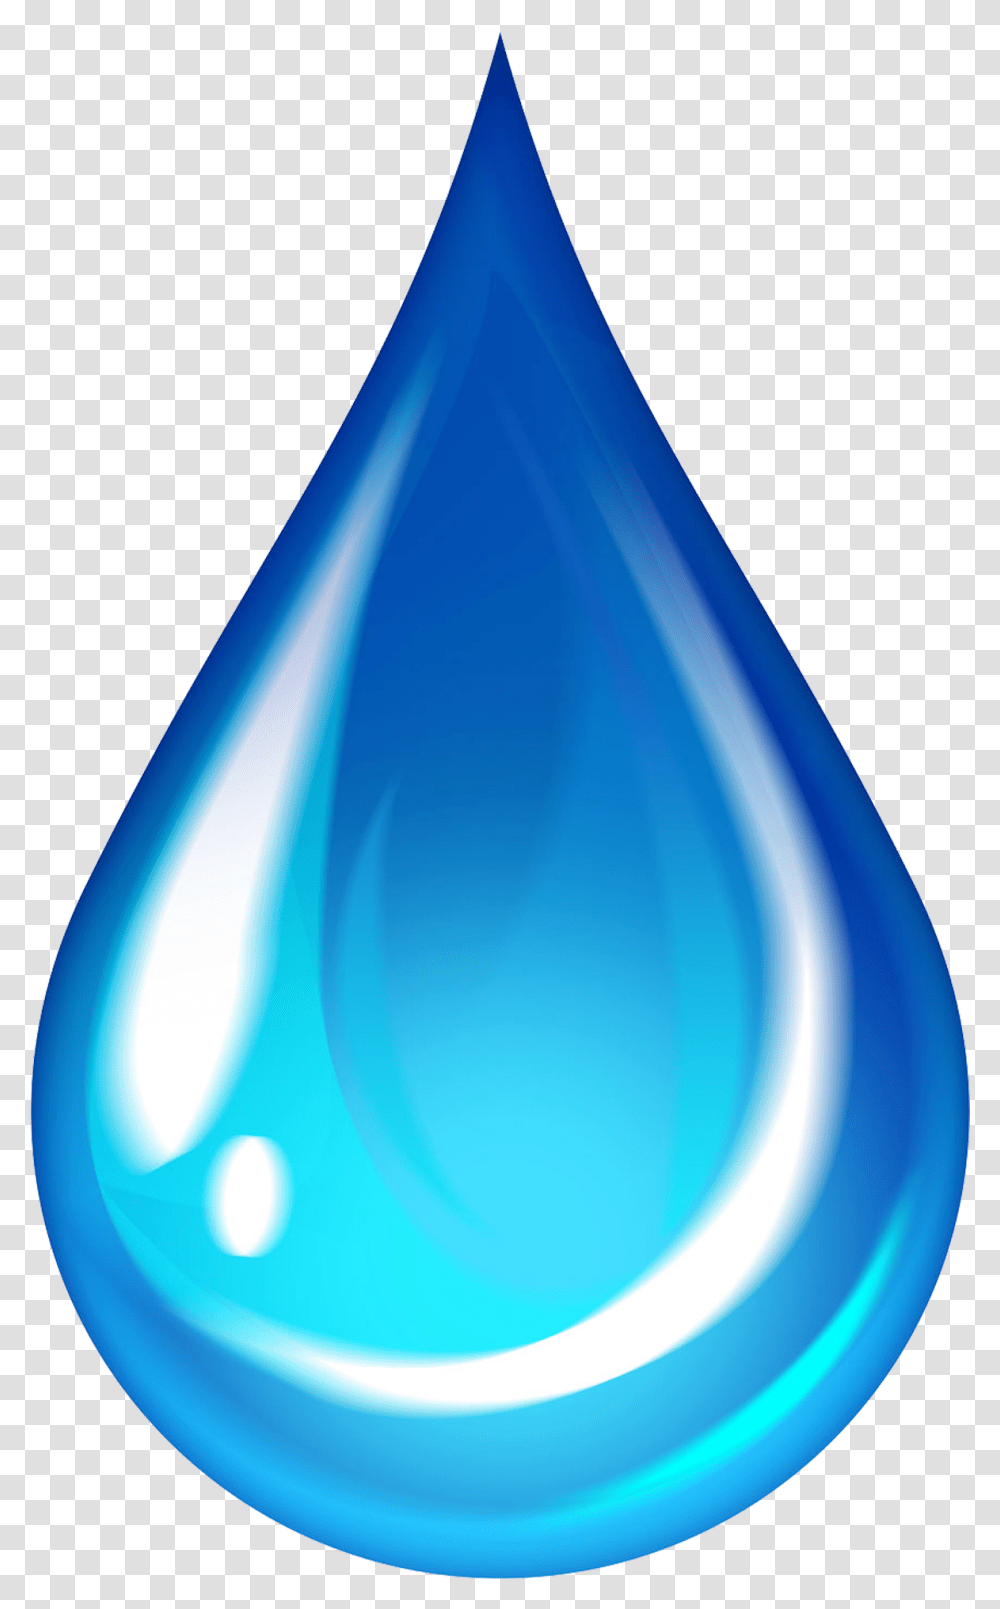 Download Hd Water Drop Symbol Clipart Flowing Water Clip Art, Droplet Transparent Png